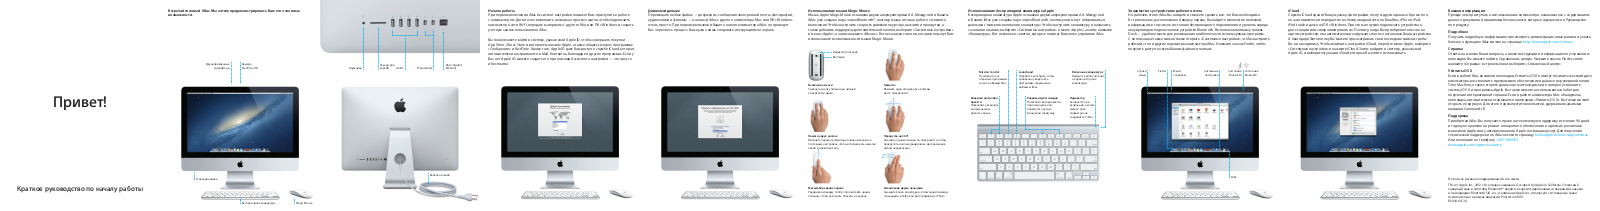 APPLE iMac 2012 User Manual